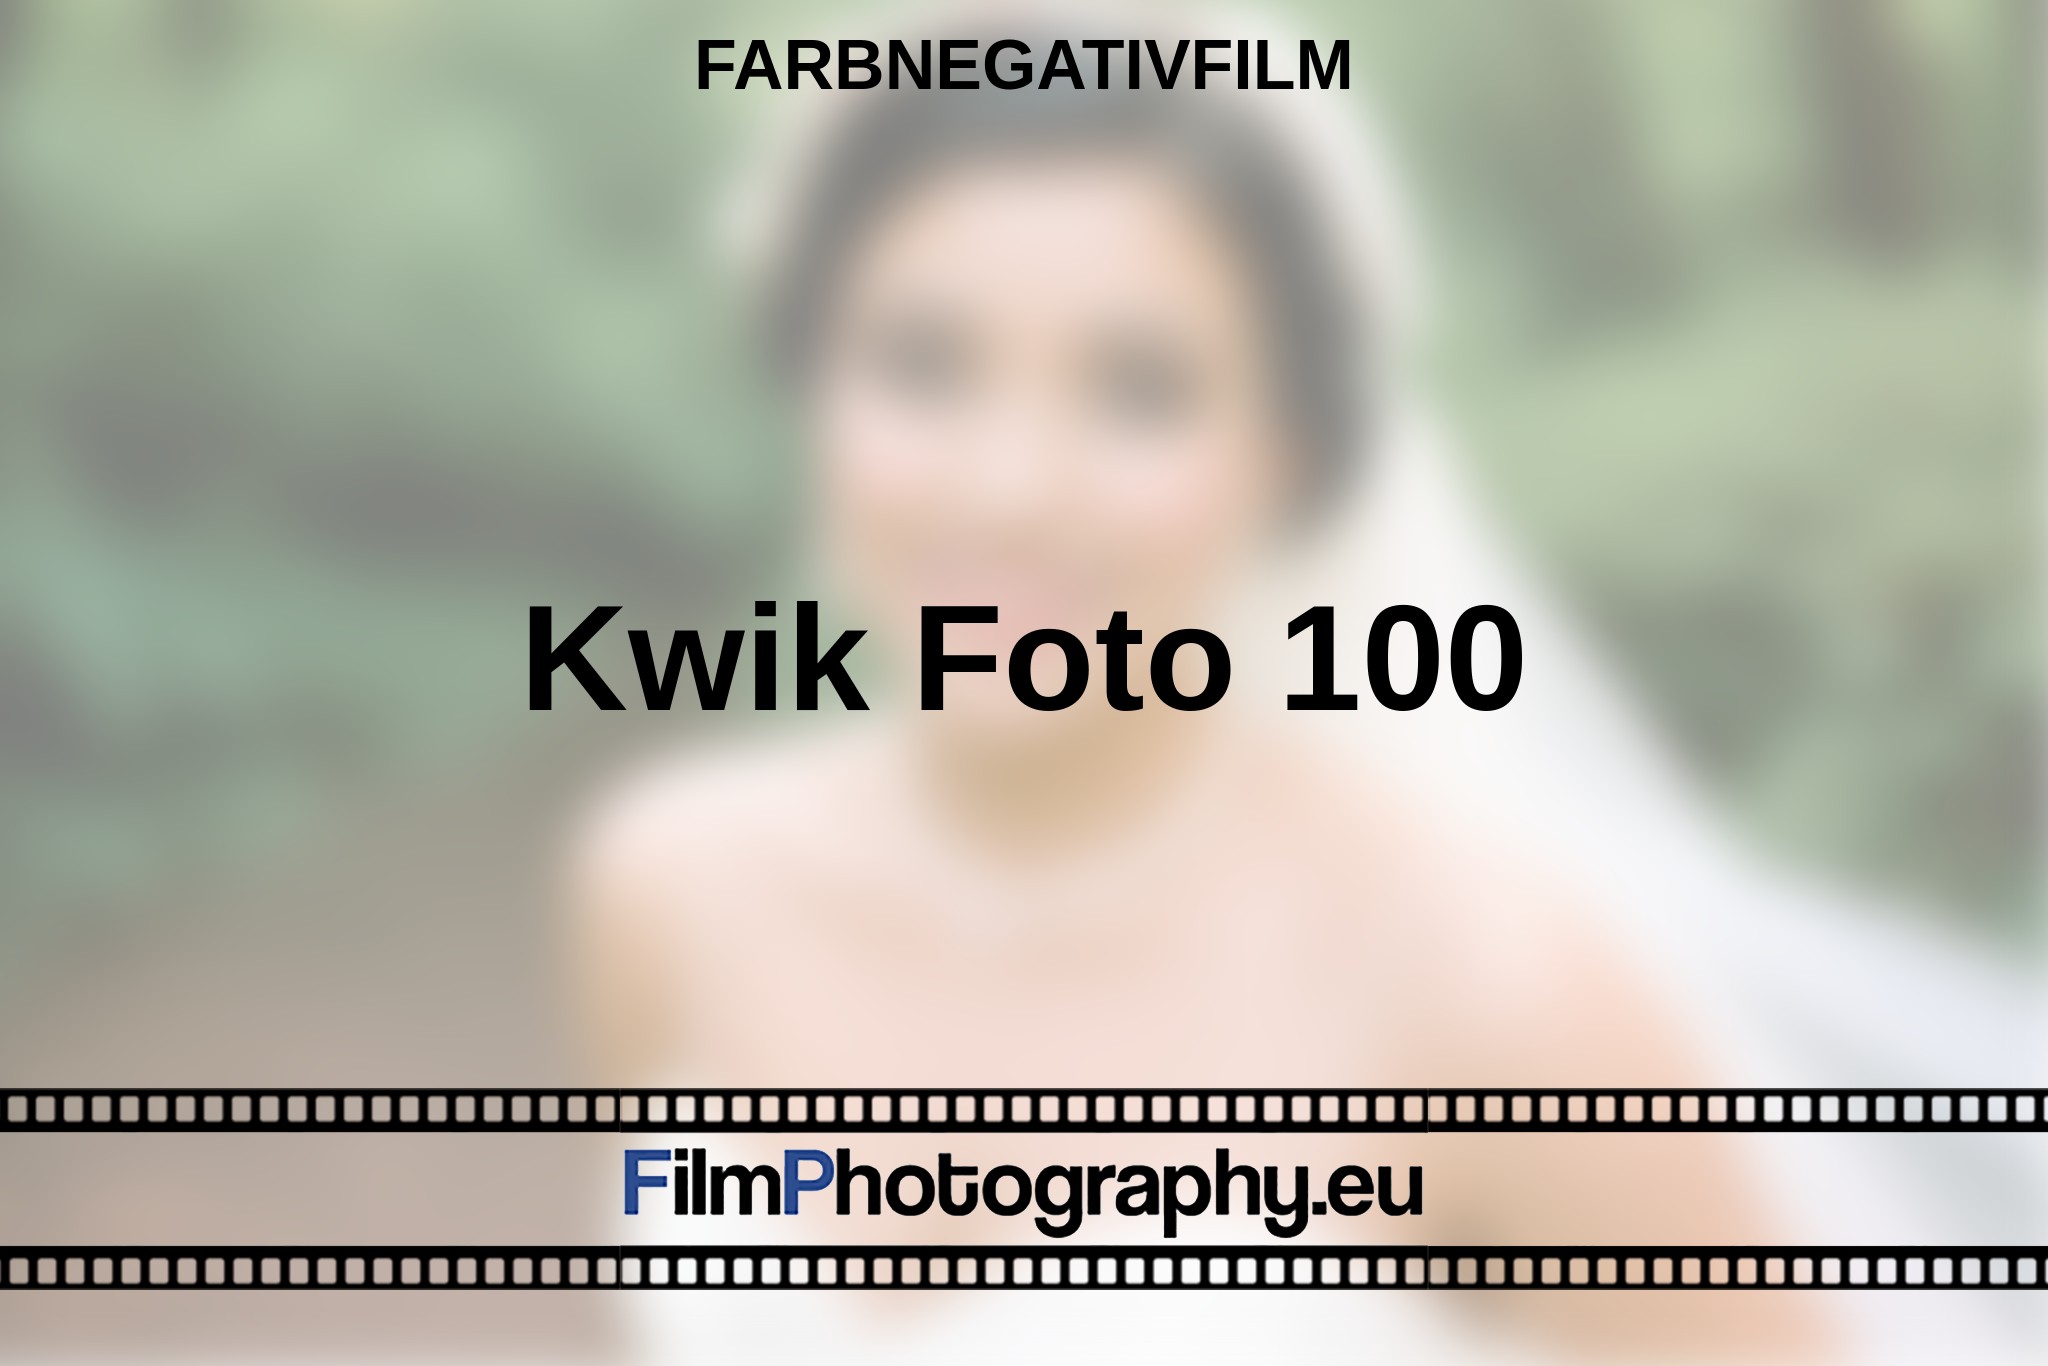 kwik-foto-100-farbnegativfilm-bnv.jpg